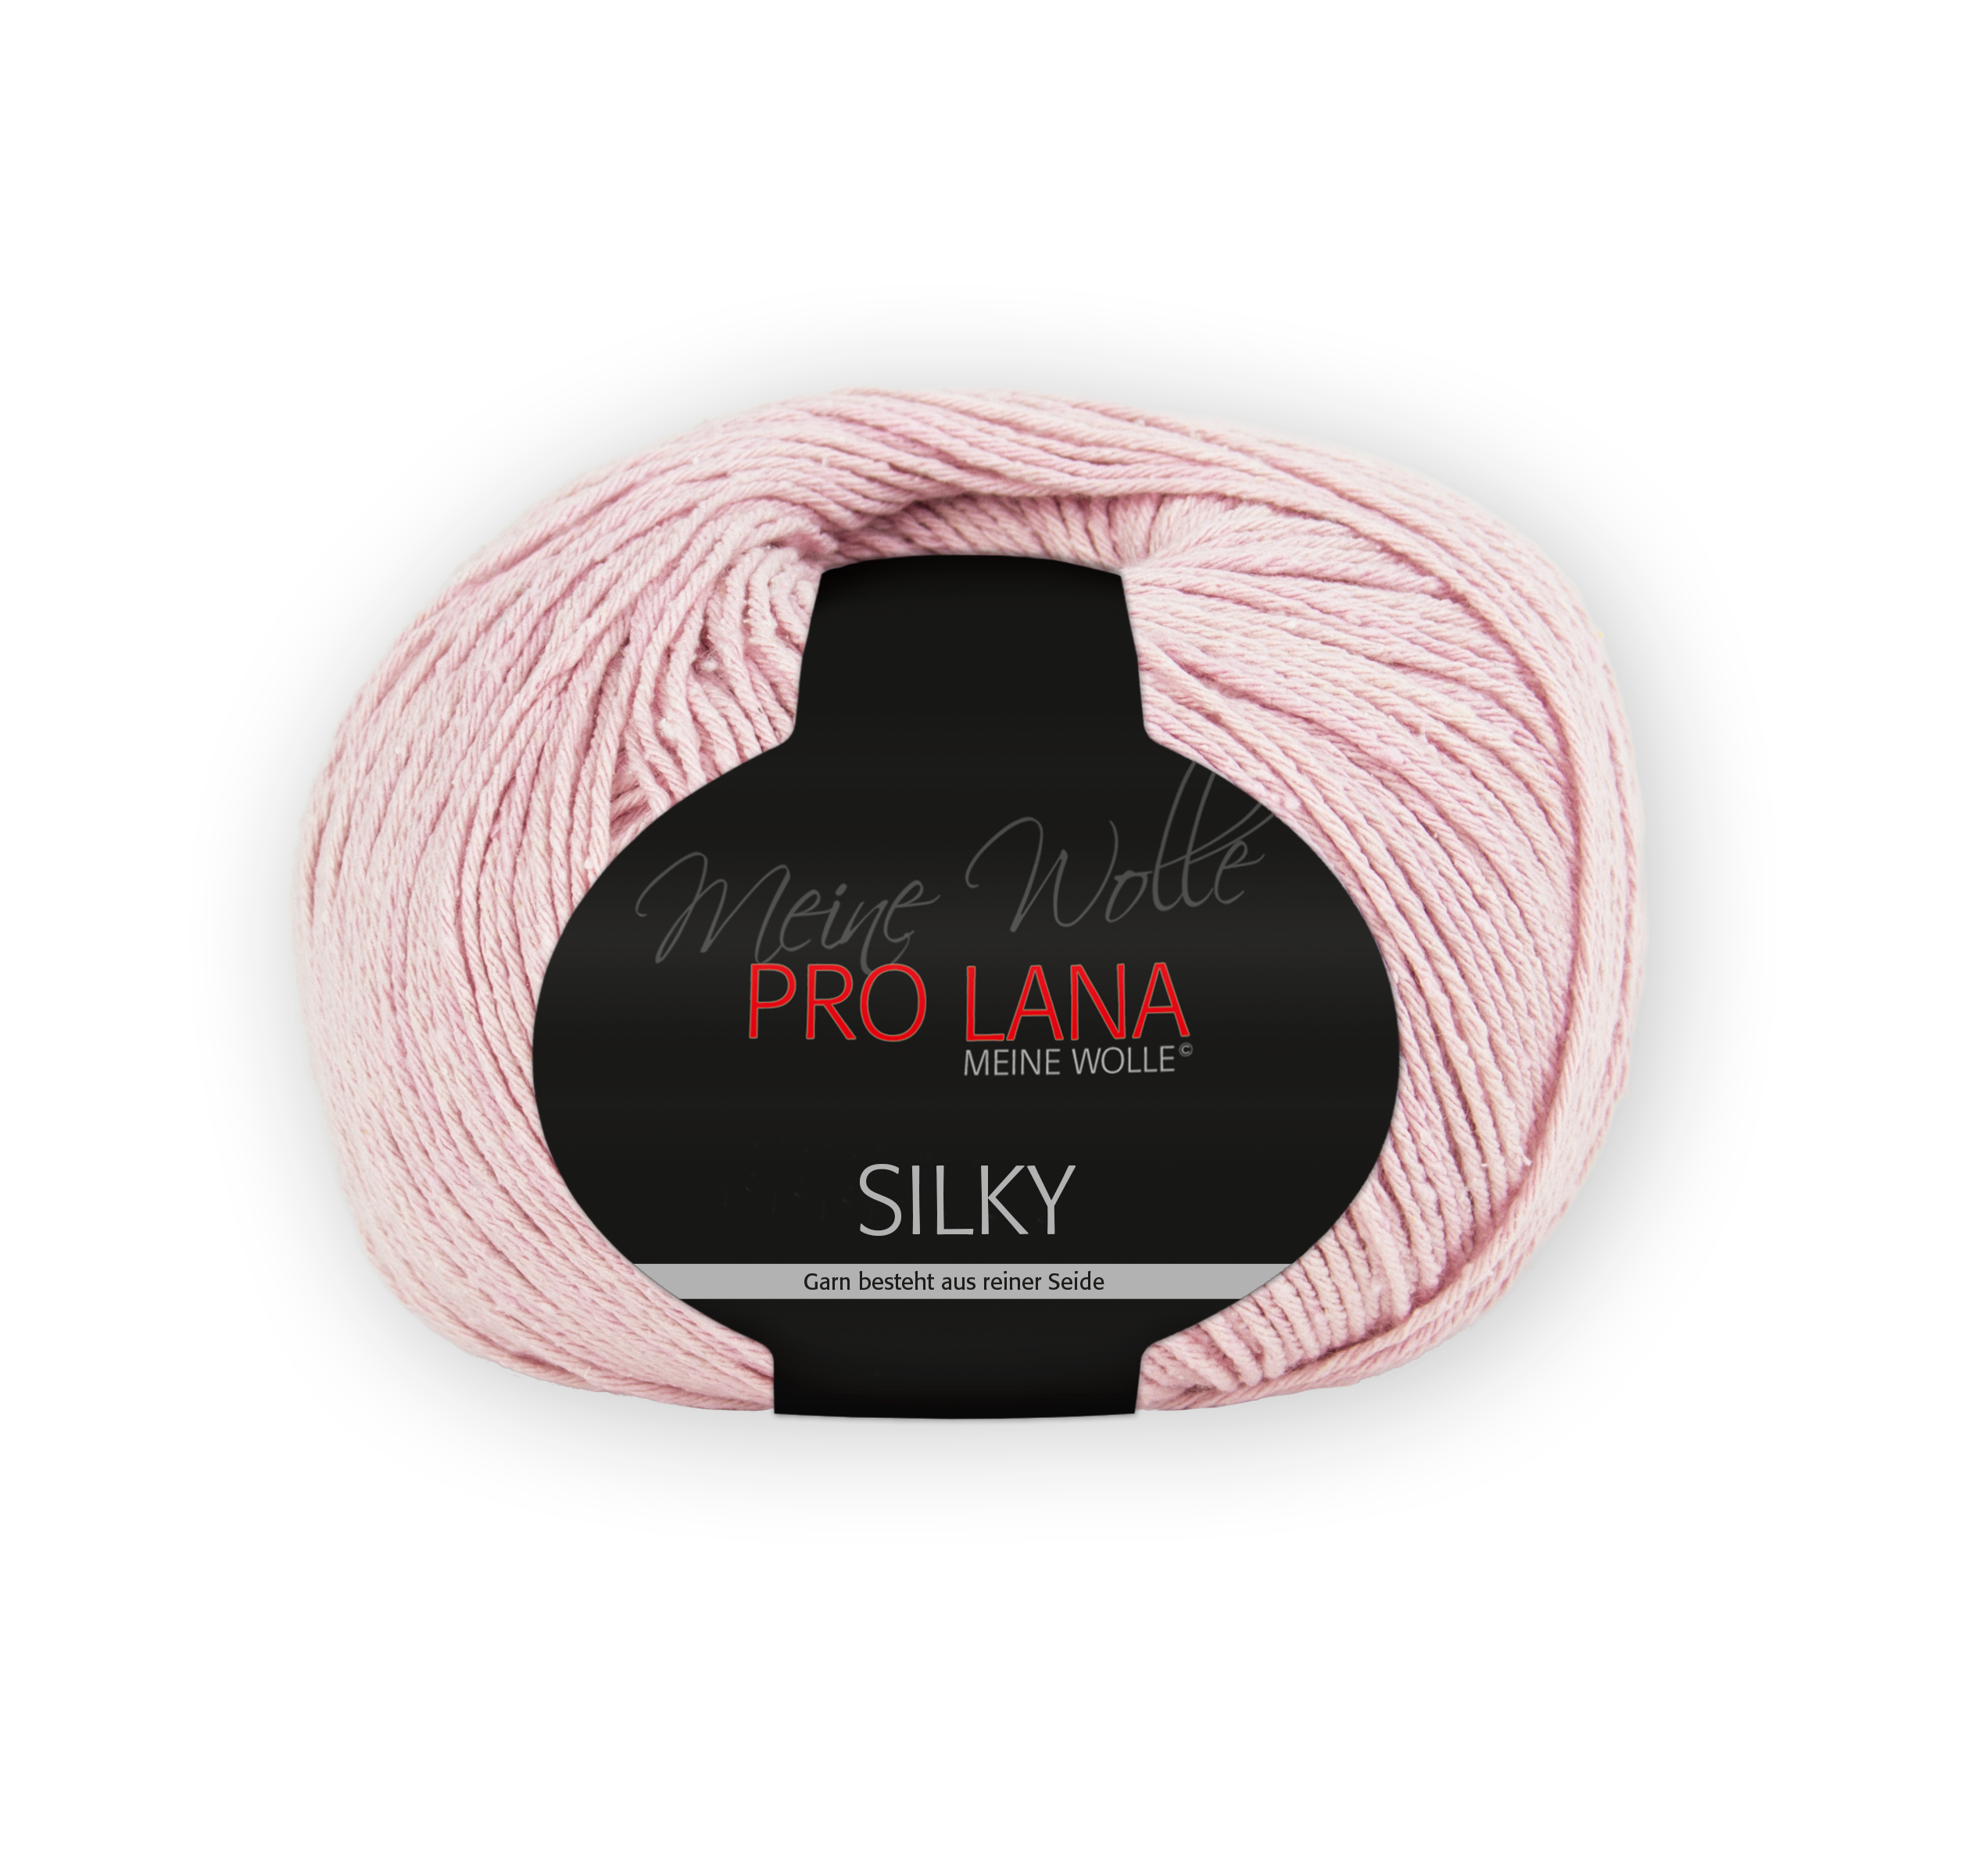 Pro Lana Silky 50g - Blassrosa 37